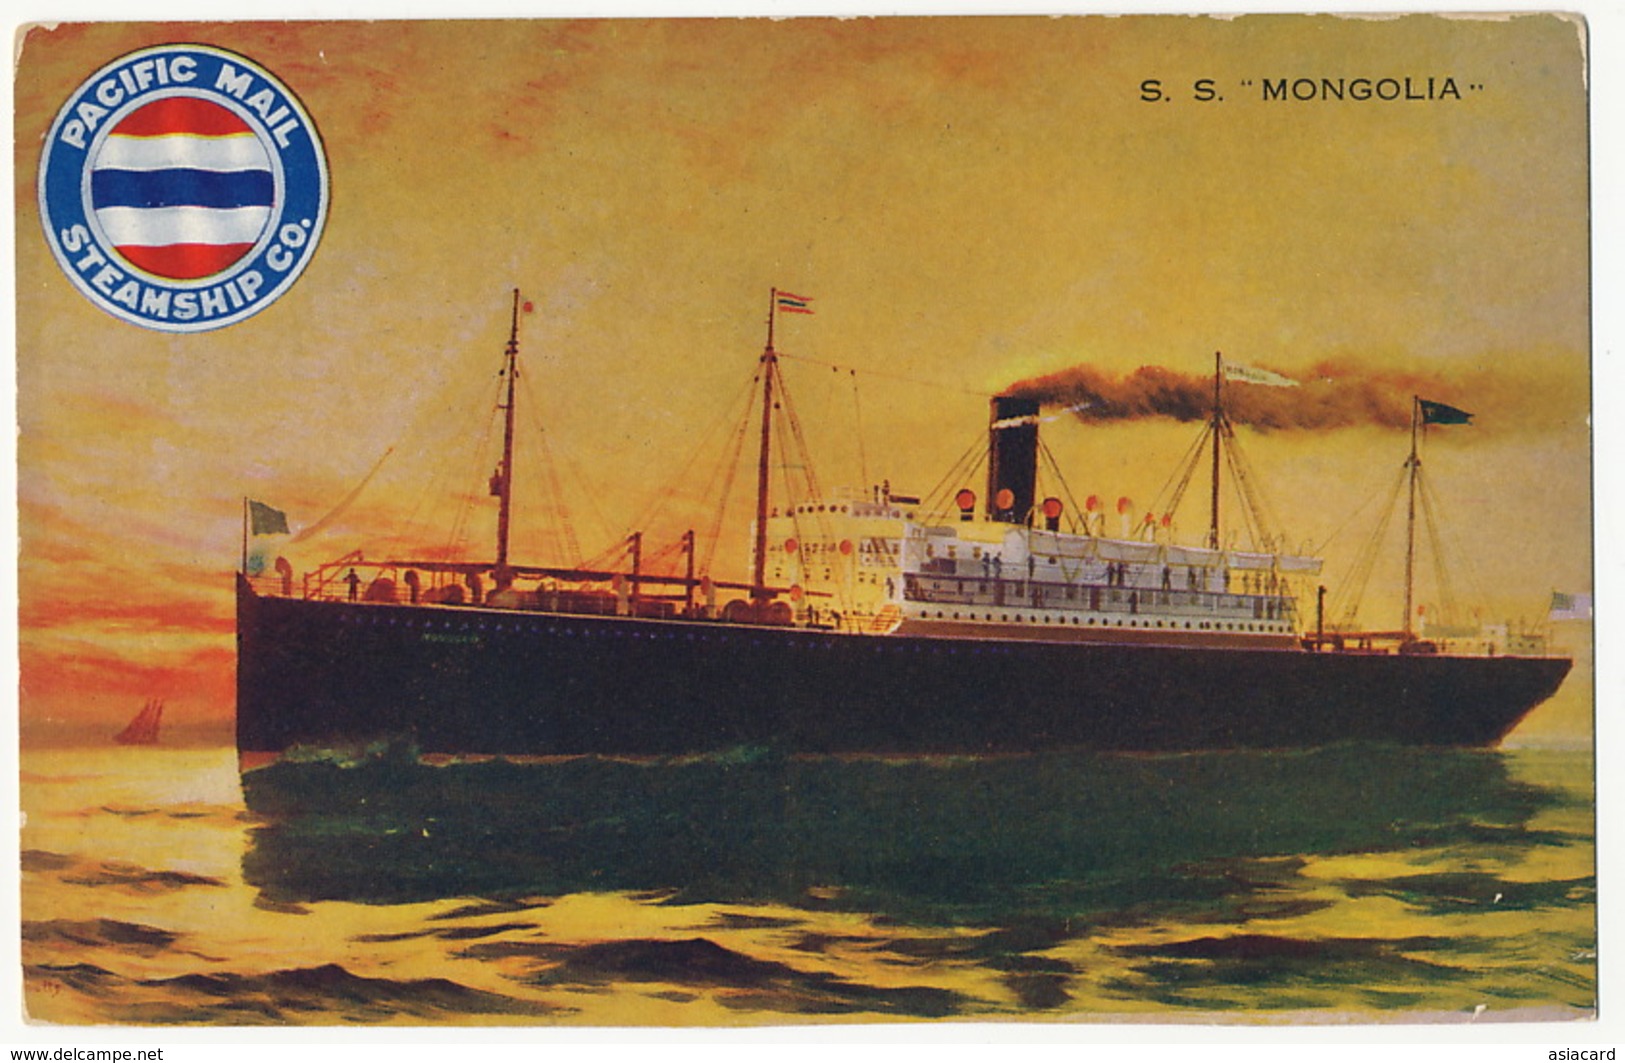 S.S. " Mongolia " Paquebot Ship Pacific Mail Steamship Co. - Mongolie